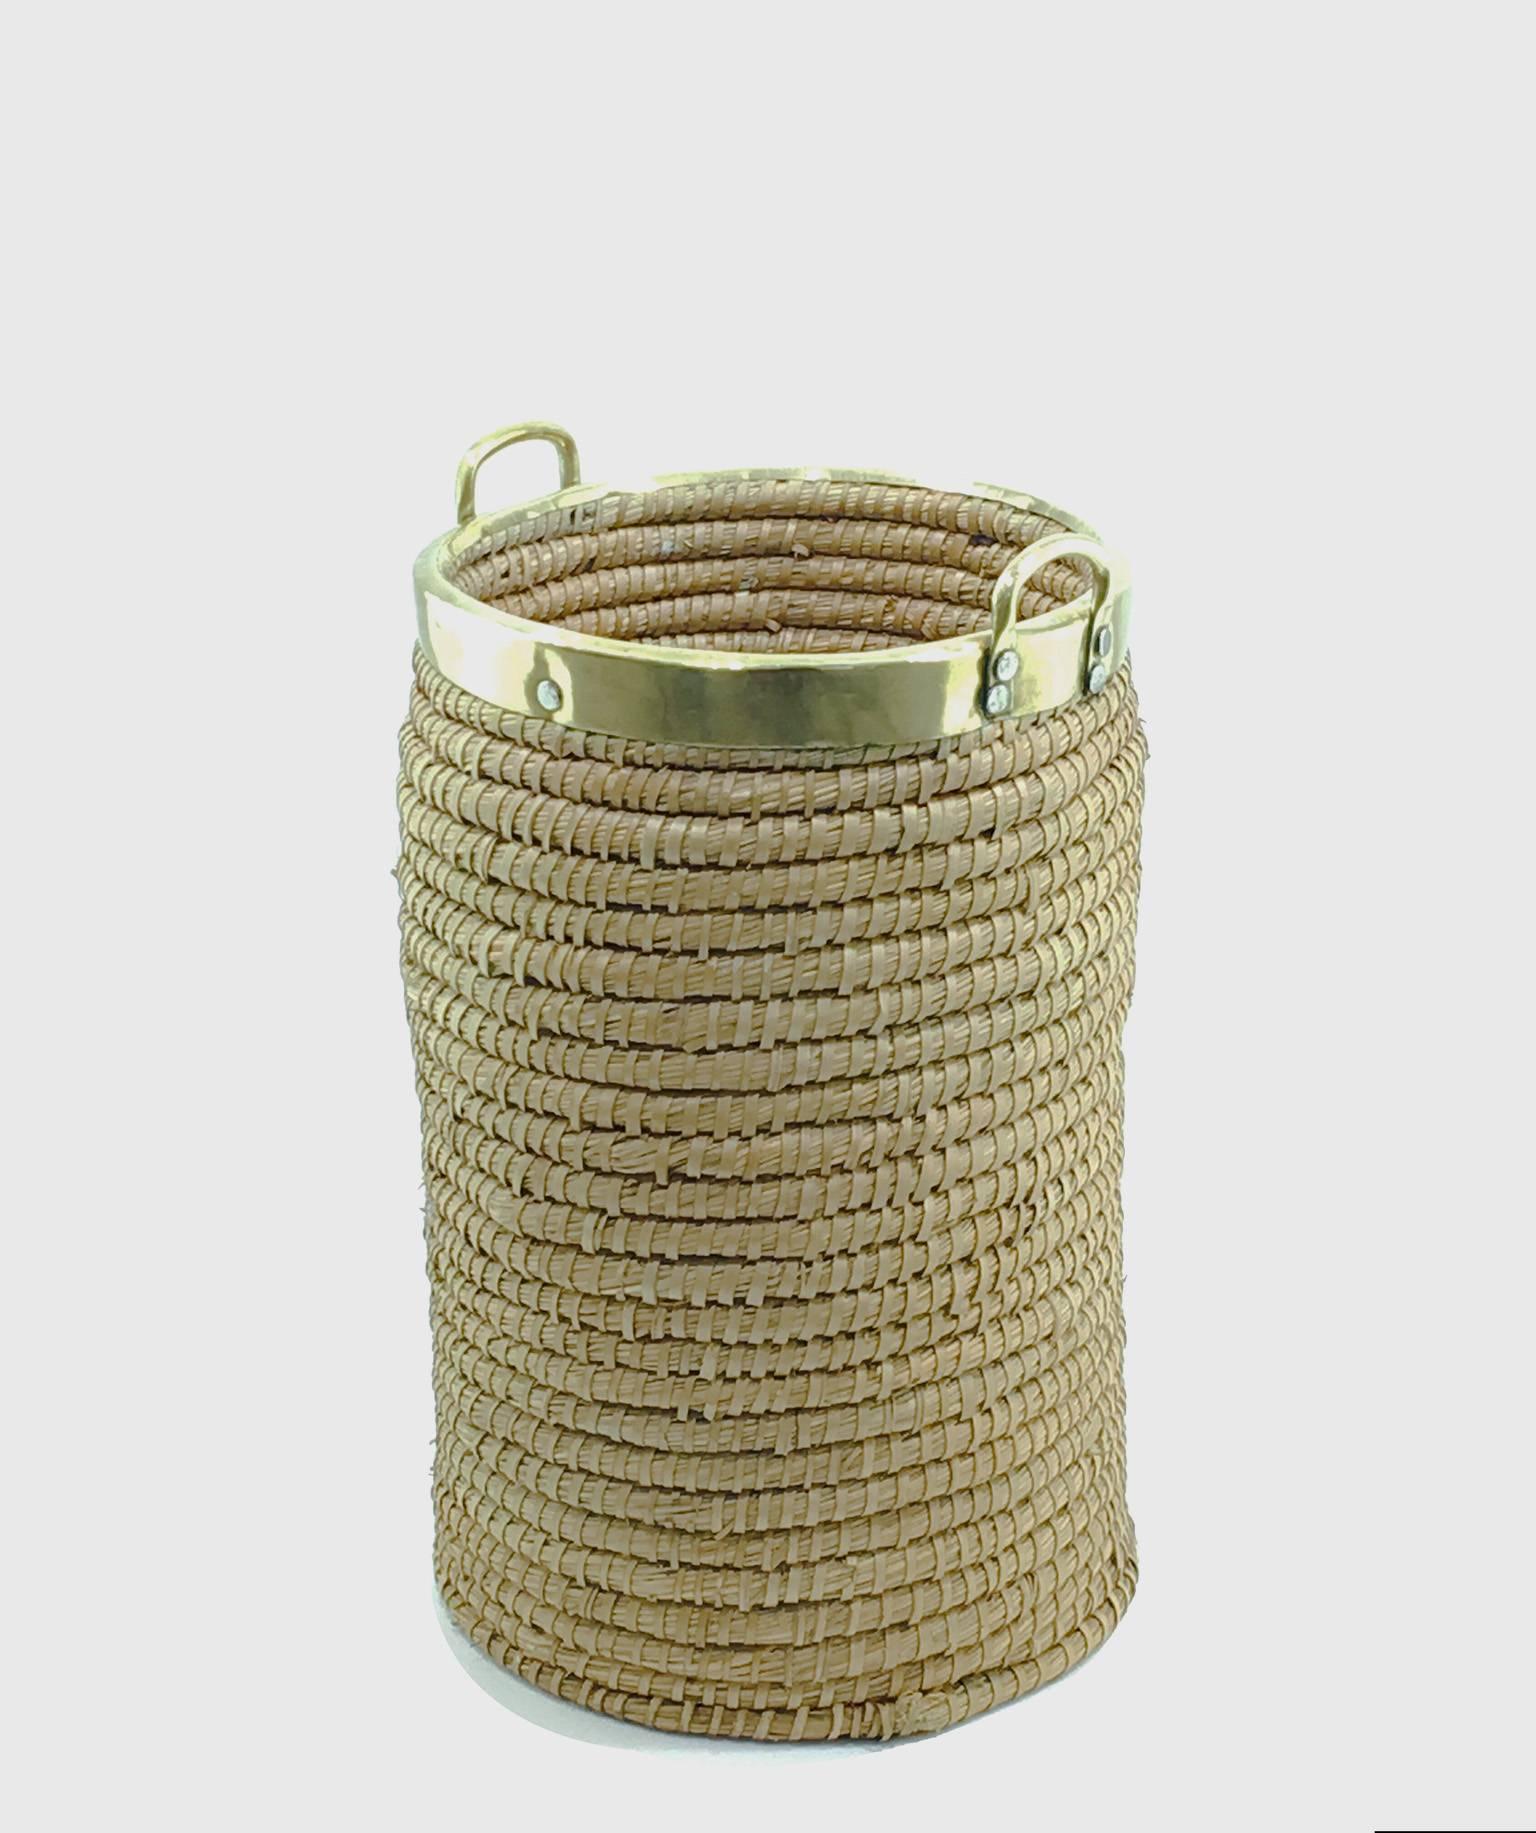 Carl Auböck basket or umbrella stand /holder in rattan (wheat).